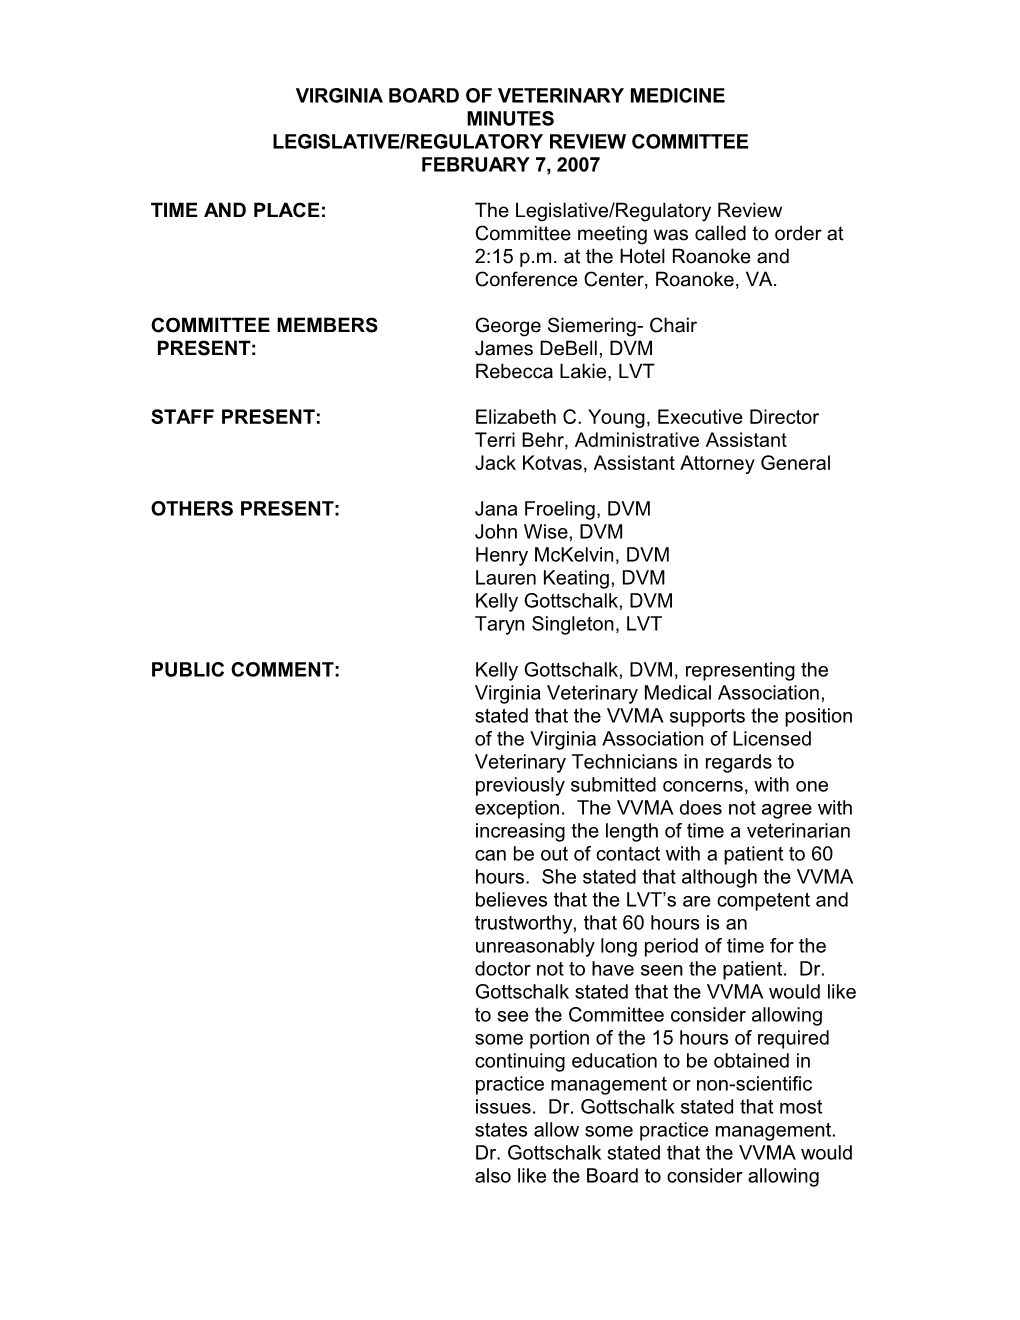 Veterinary Medicine - Legislative/Regulatory Review Committee Minutes February 7, 2007